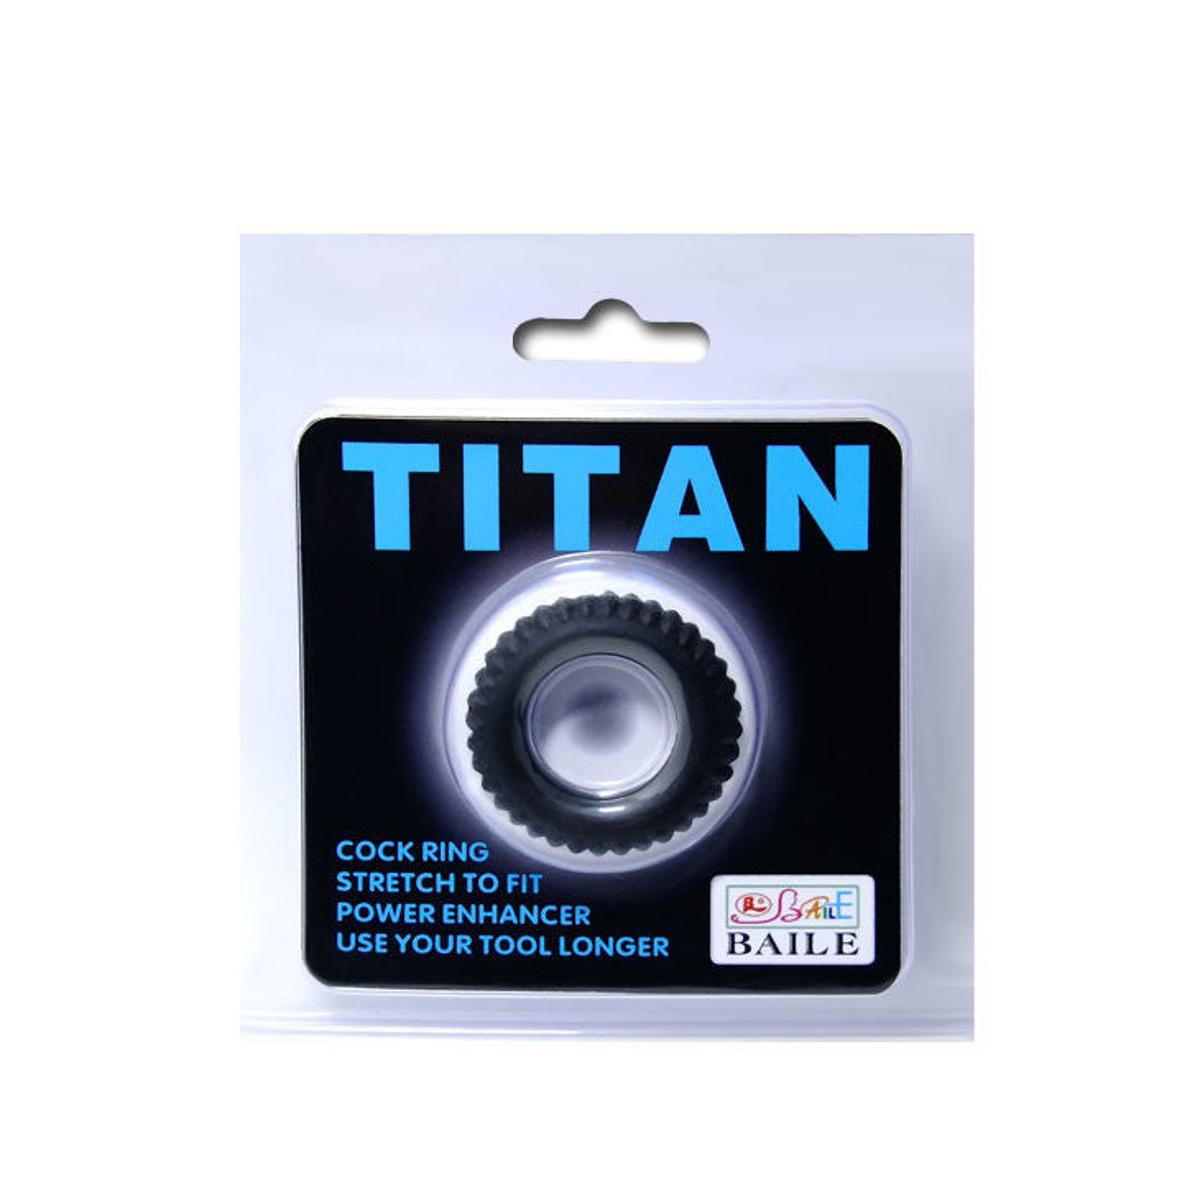 Penisring "Titan" - OH MY! FANTASY